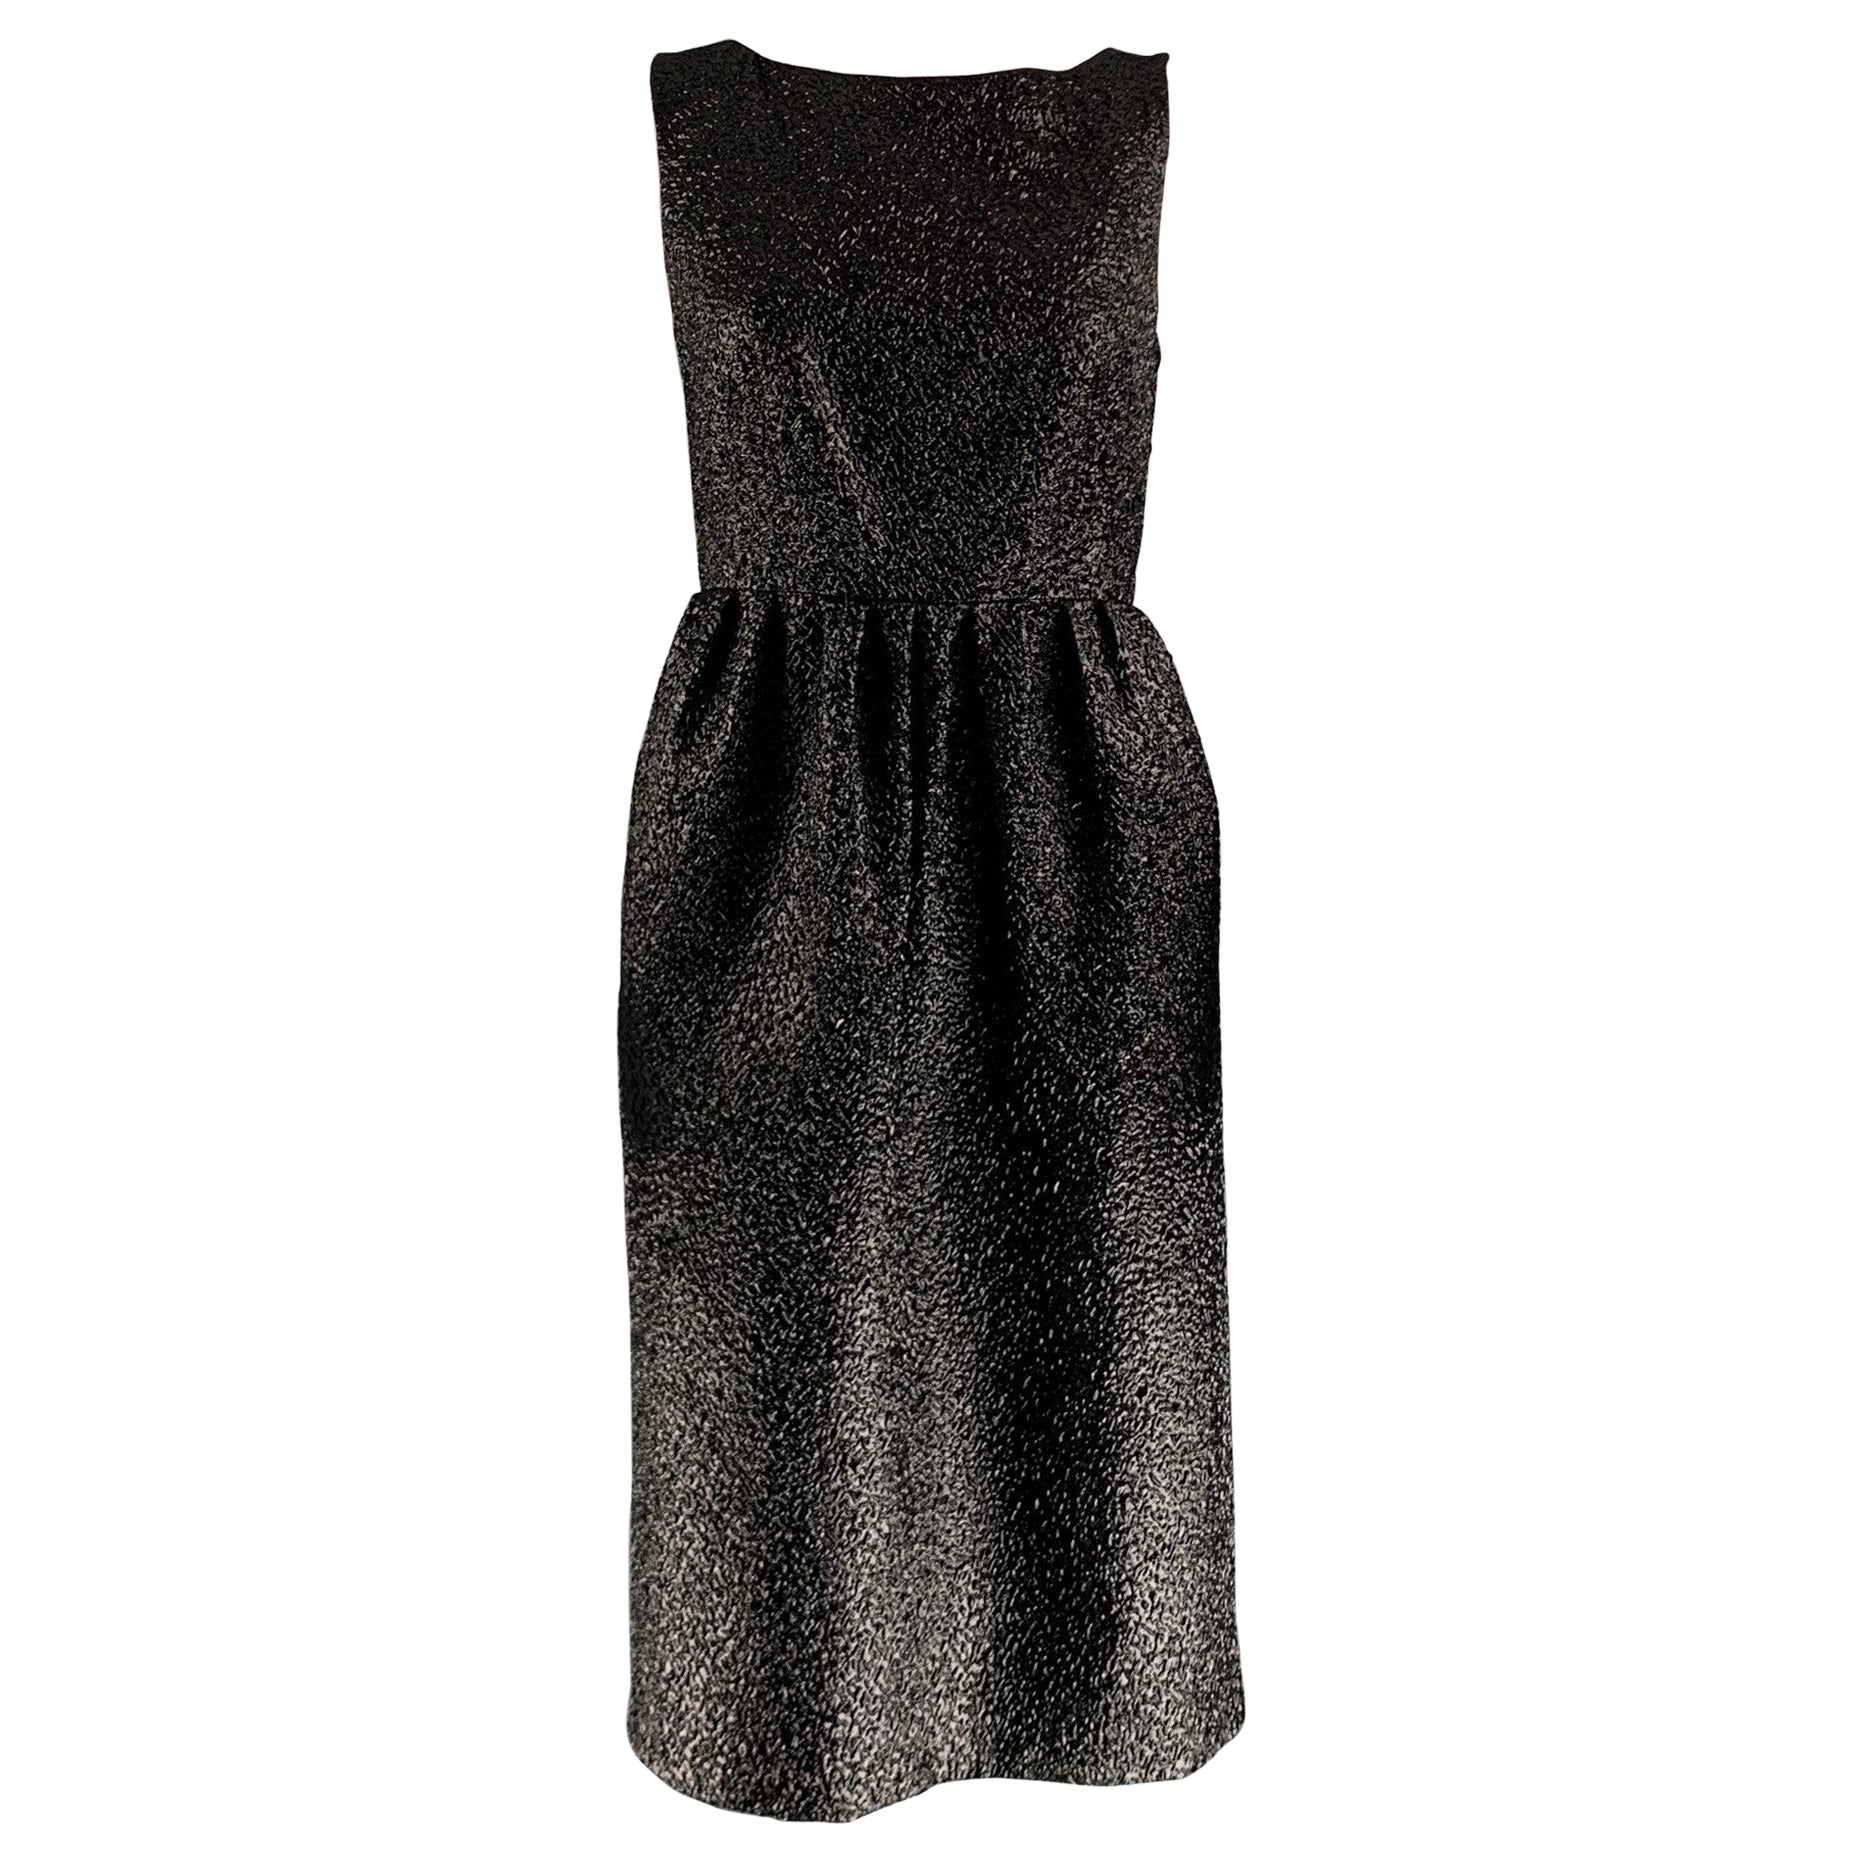 MARC JACOBS Size 0 Black Polyester Blend Textured Shift Dress For Sale